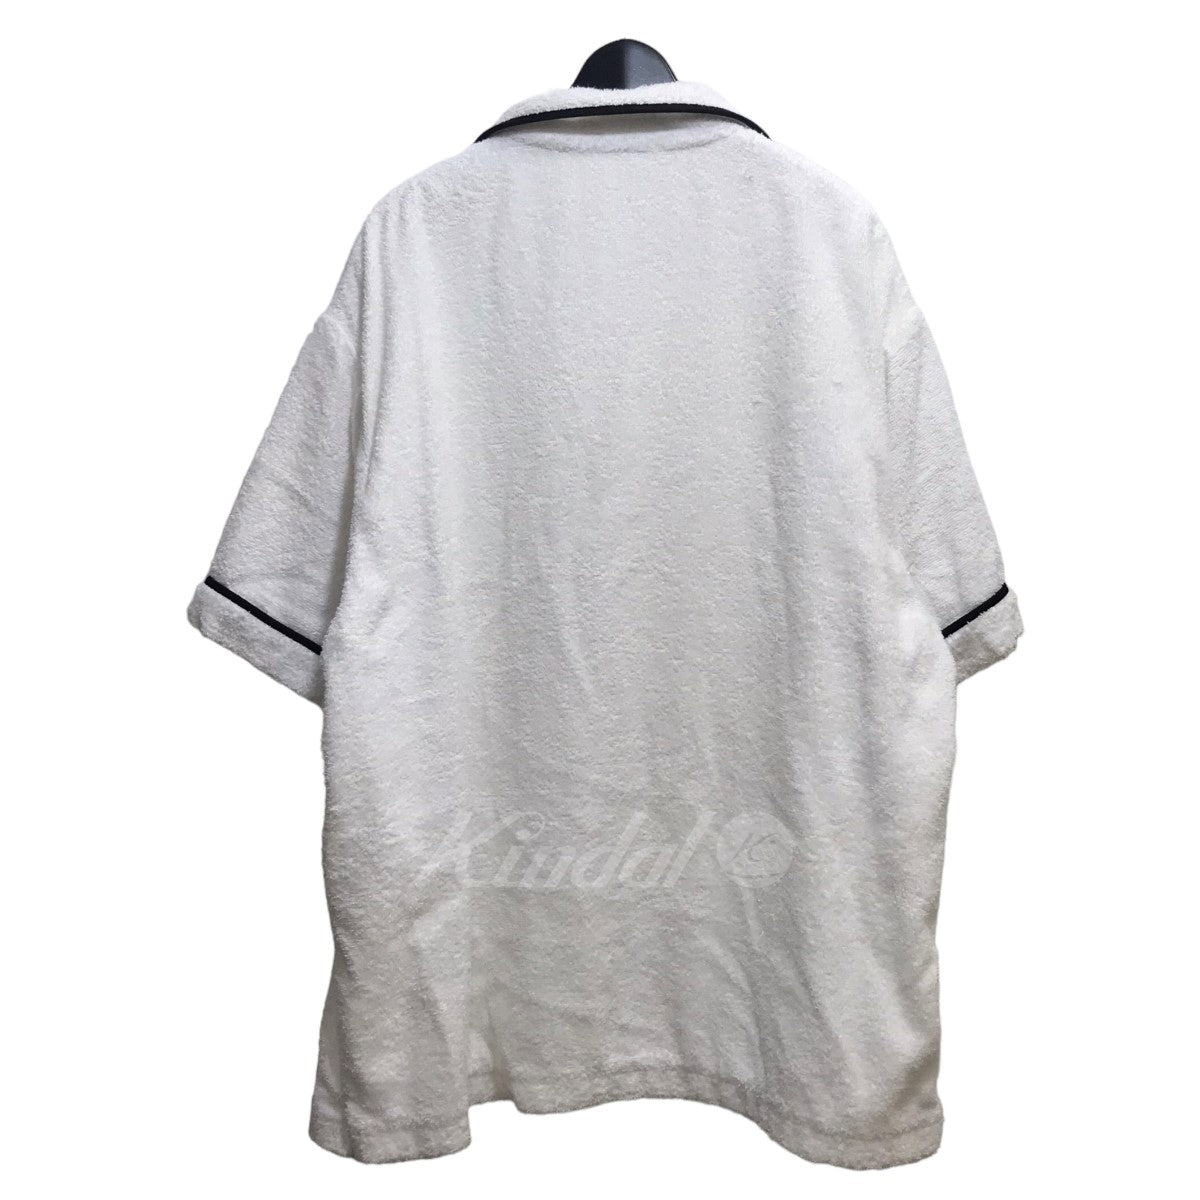 PRADA(プラダ) 22SS コットンテリーボウリングシャツ SC559 SC559 